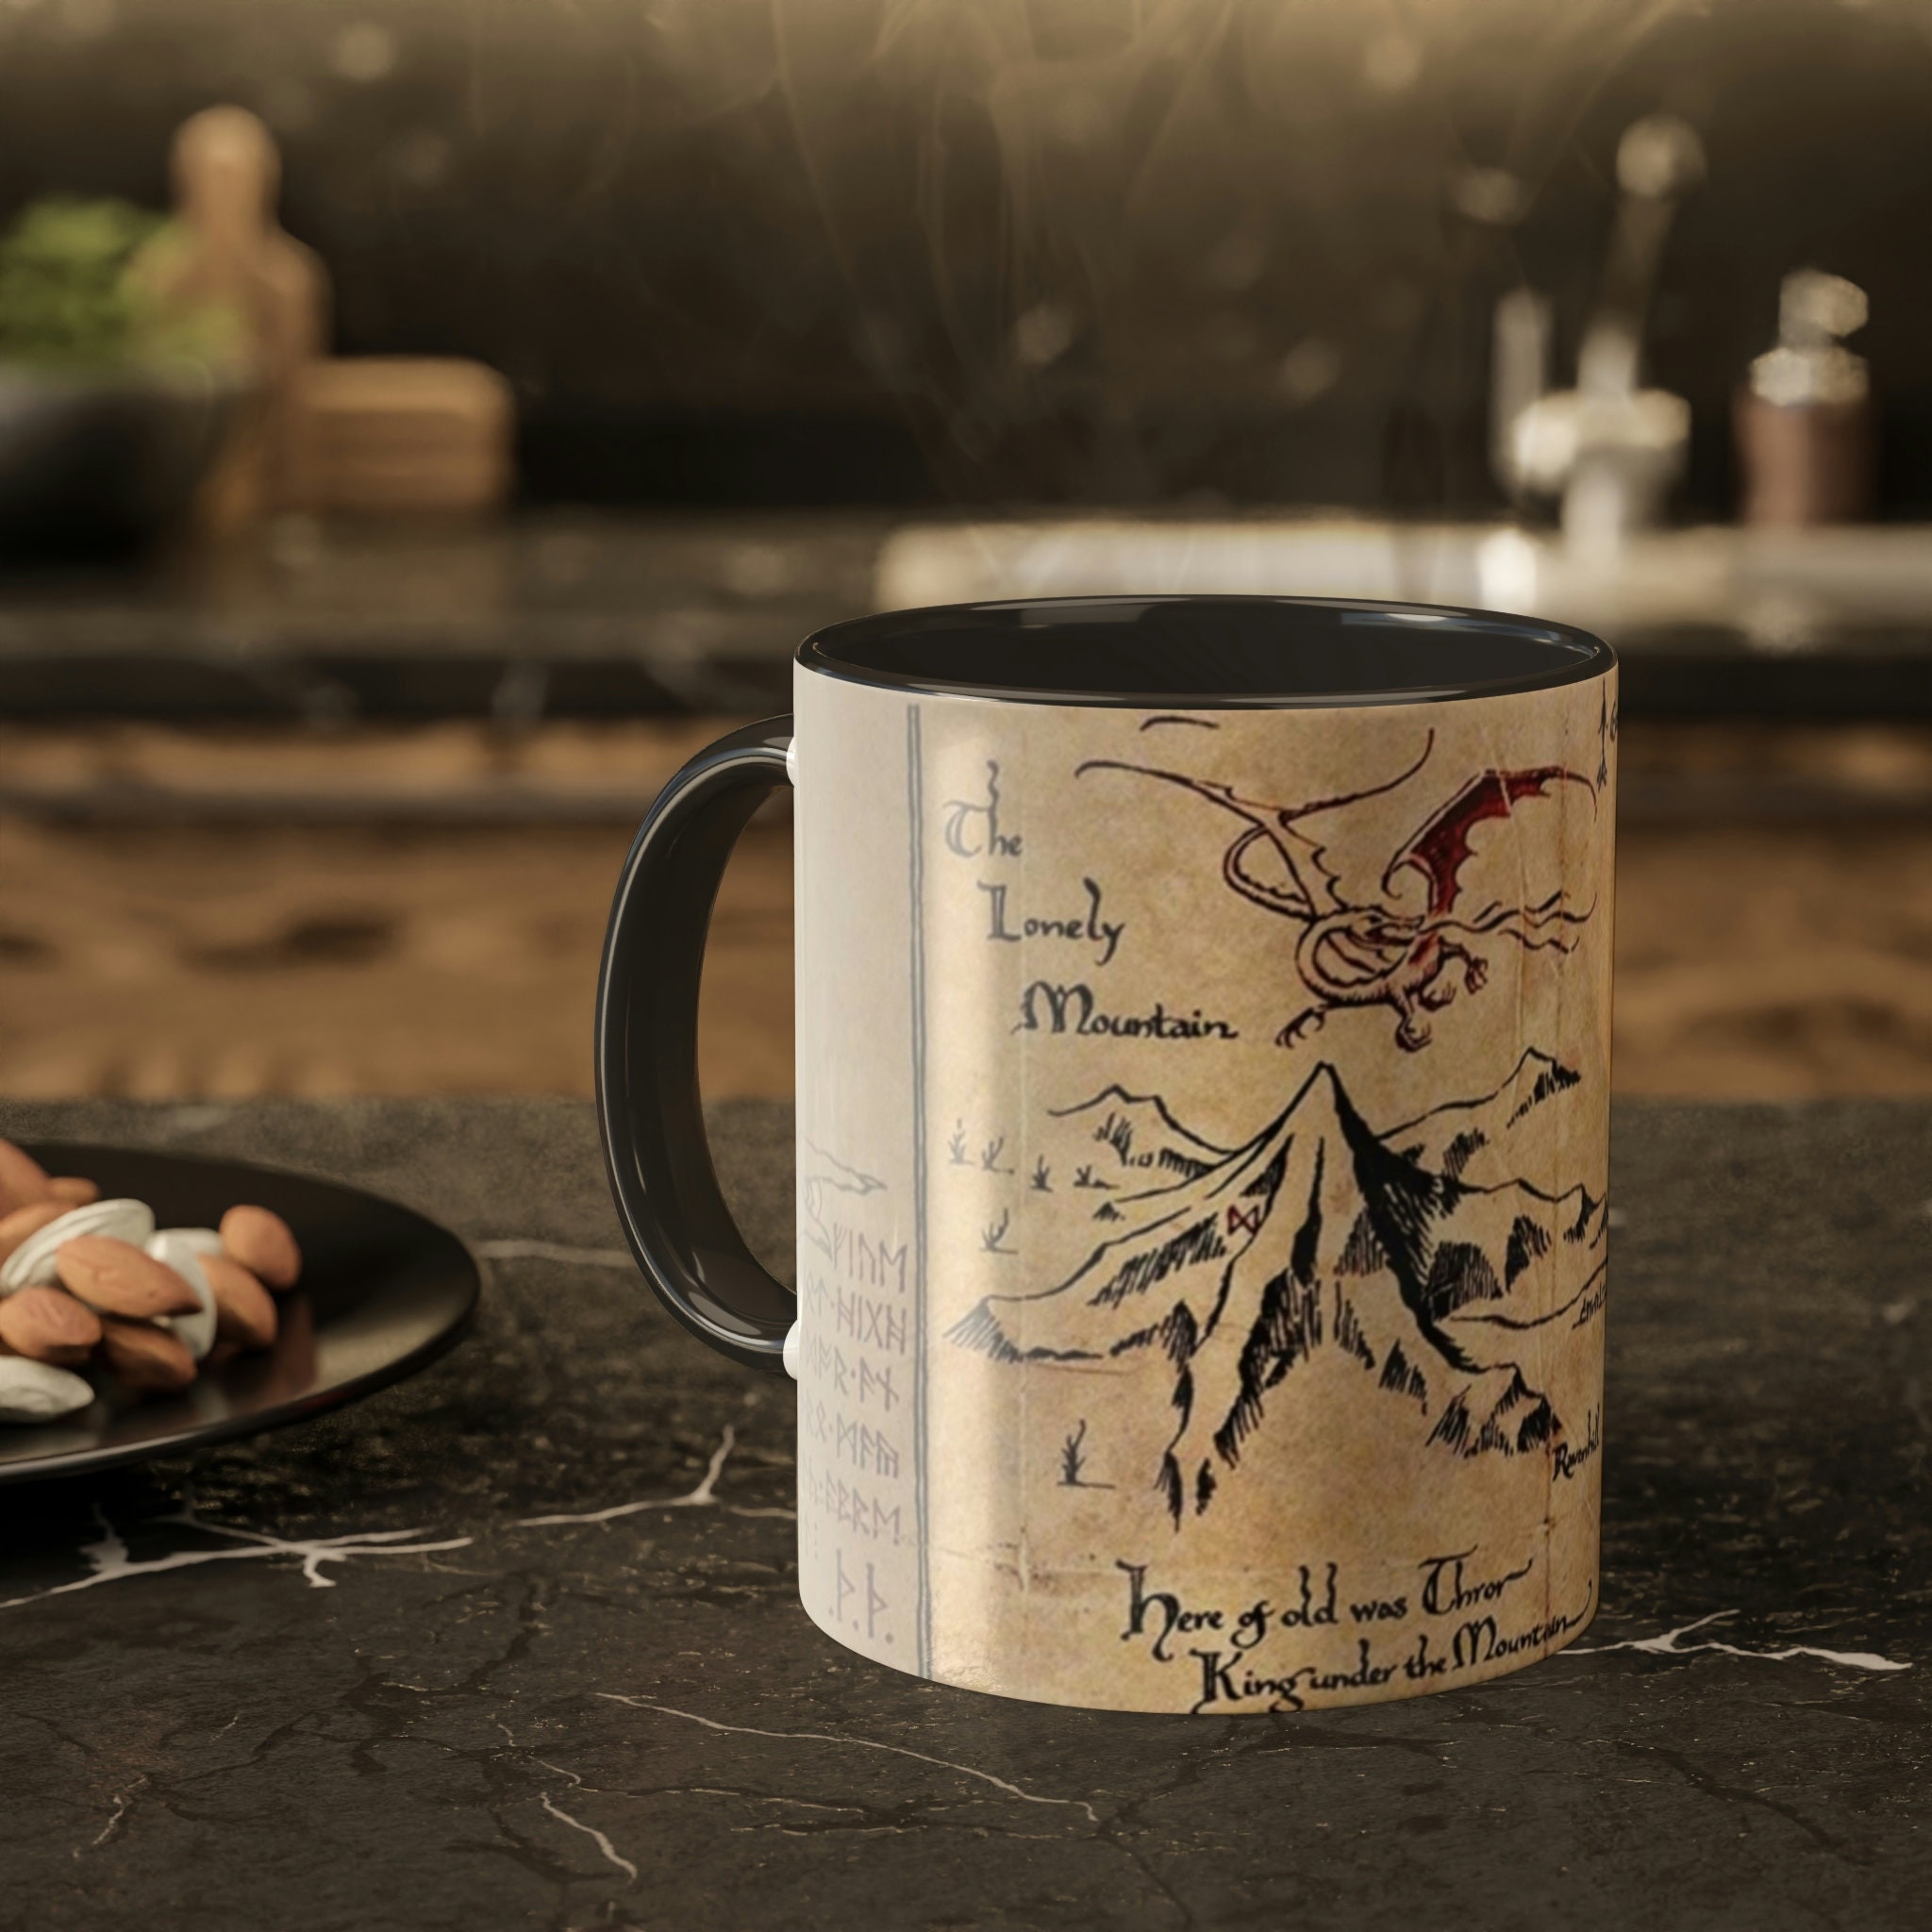 Lord of the Rings LotR - Elvish Script - 10 oz. mug